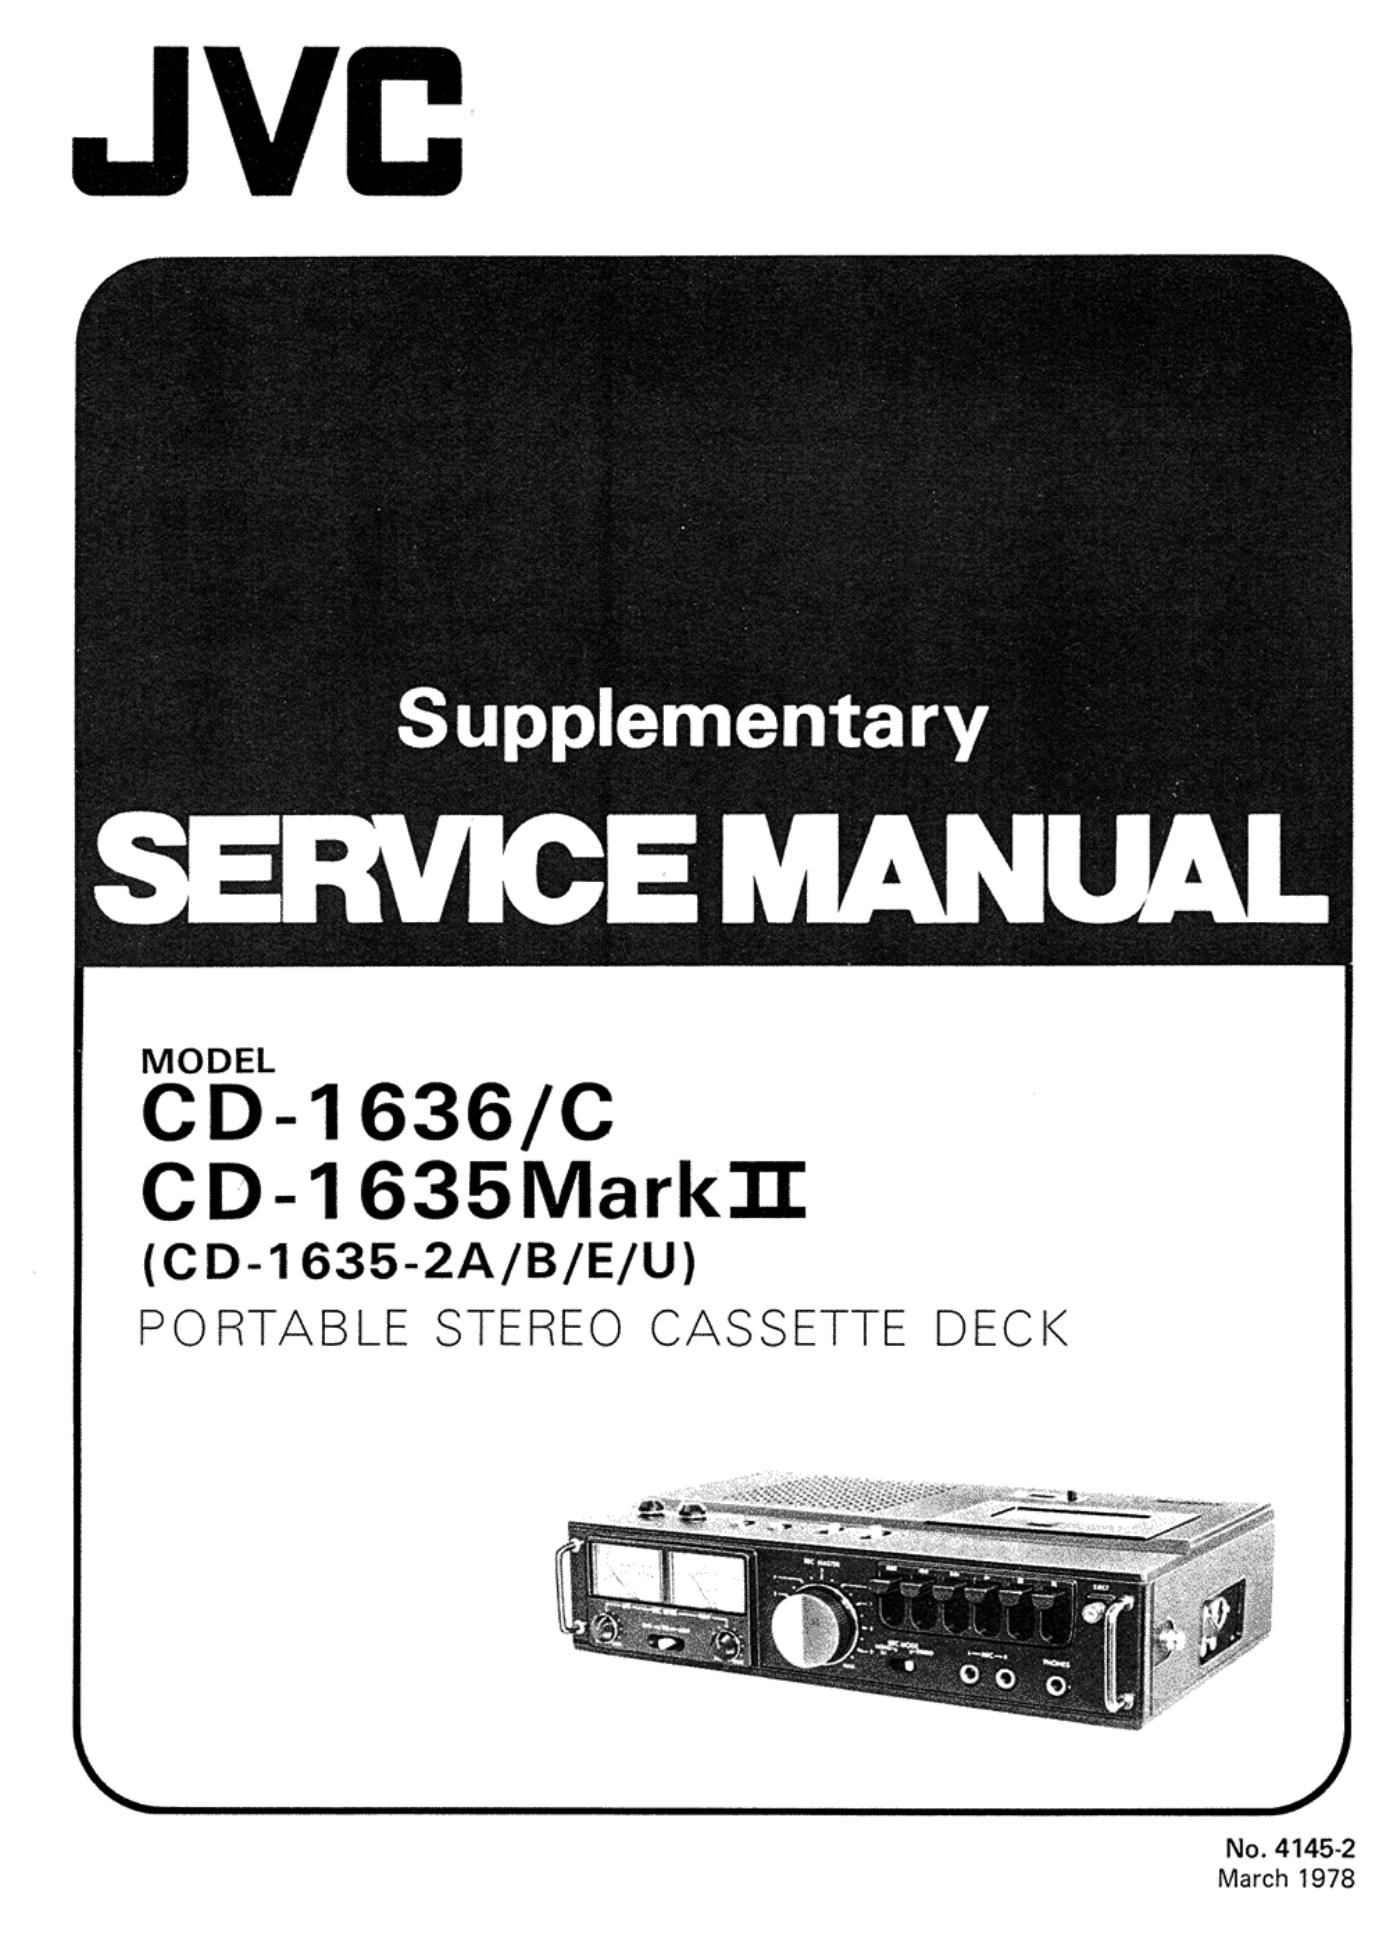 Jvc CD 1635 C Service Manual